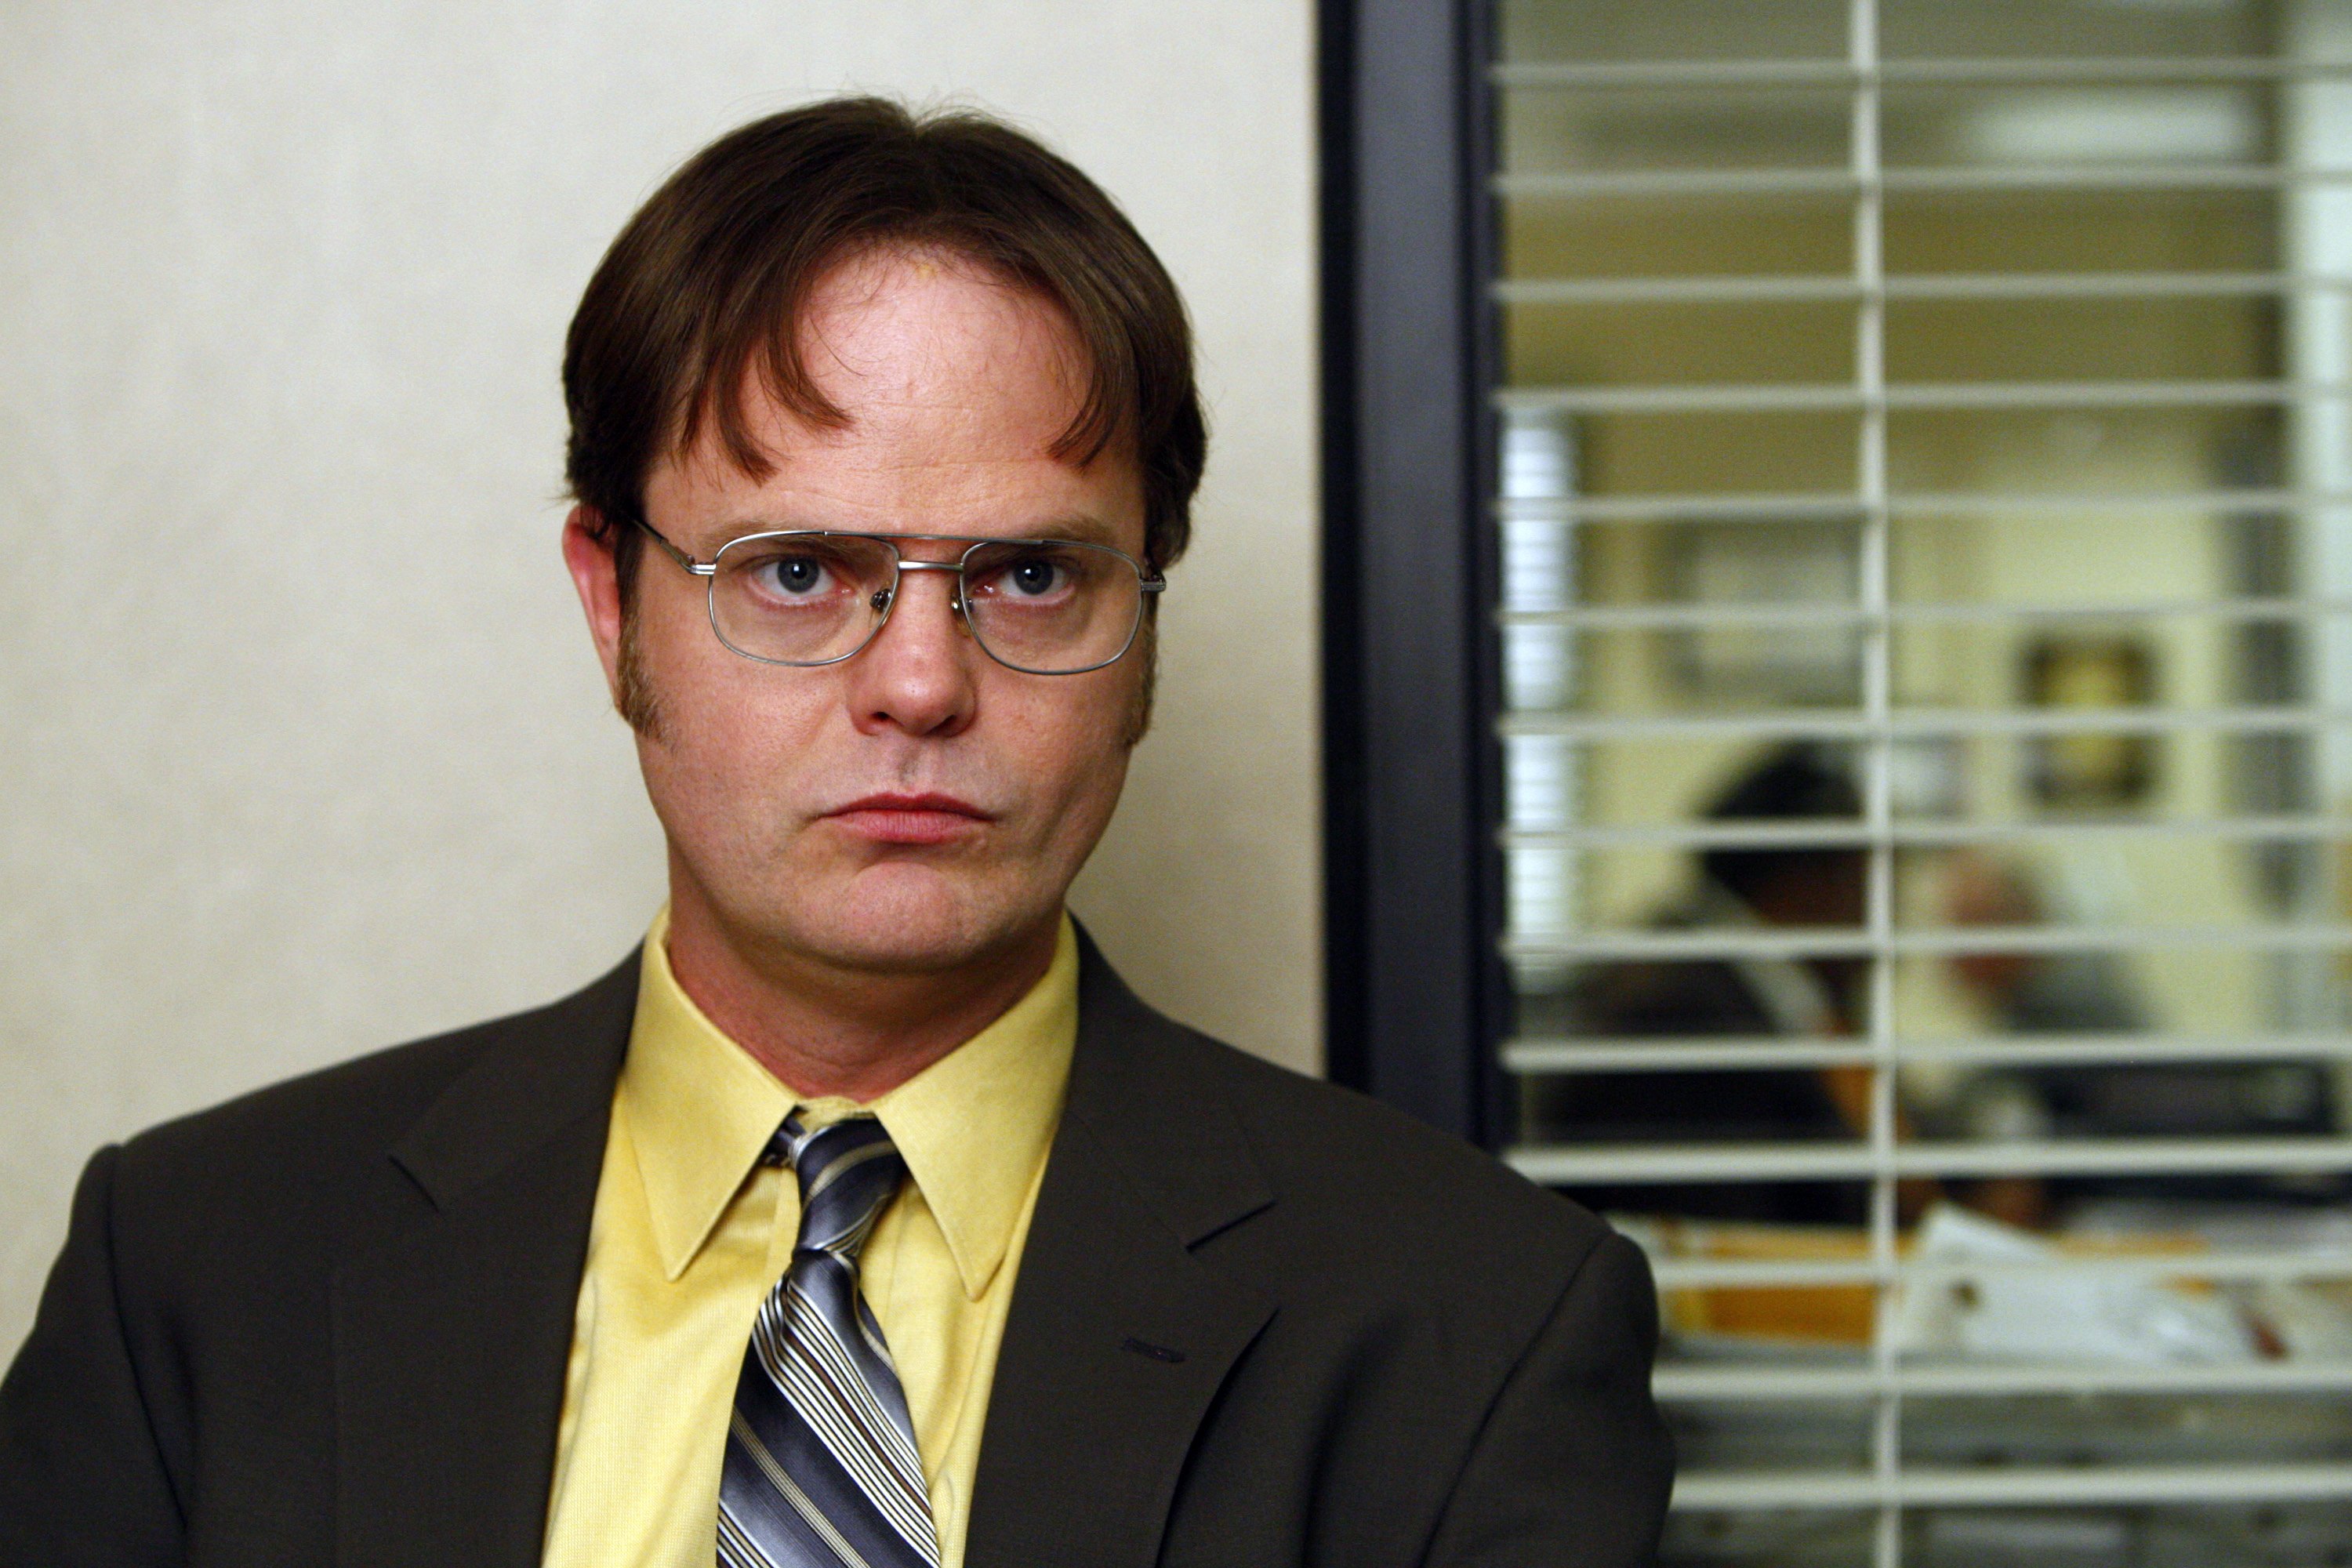 Rainn Wilson dressed as Dwight Schrute in 'The Office'